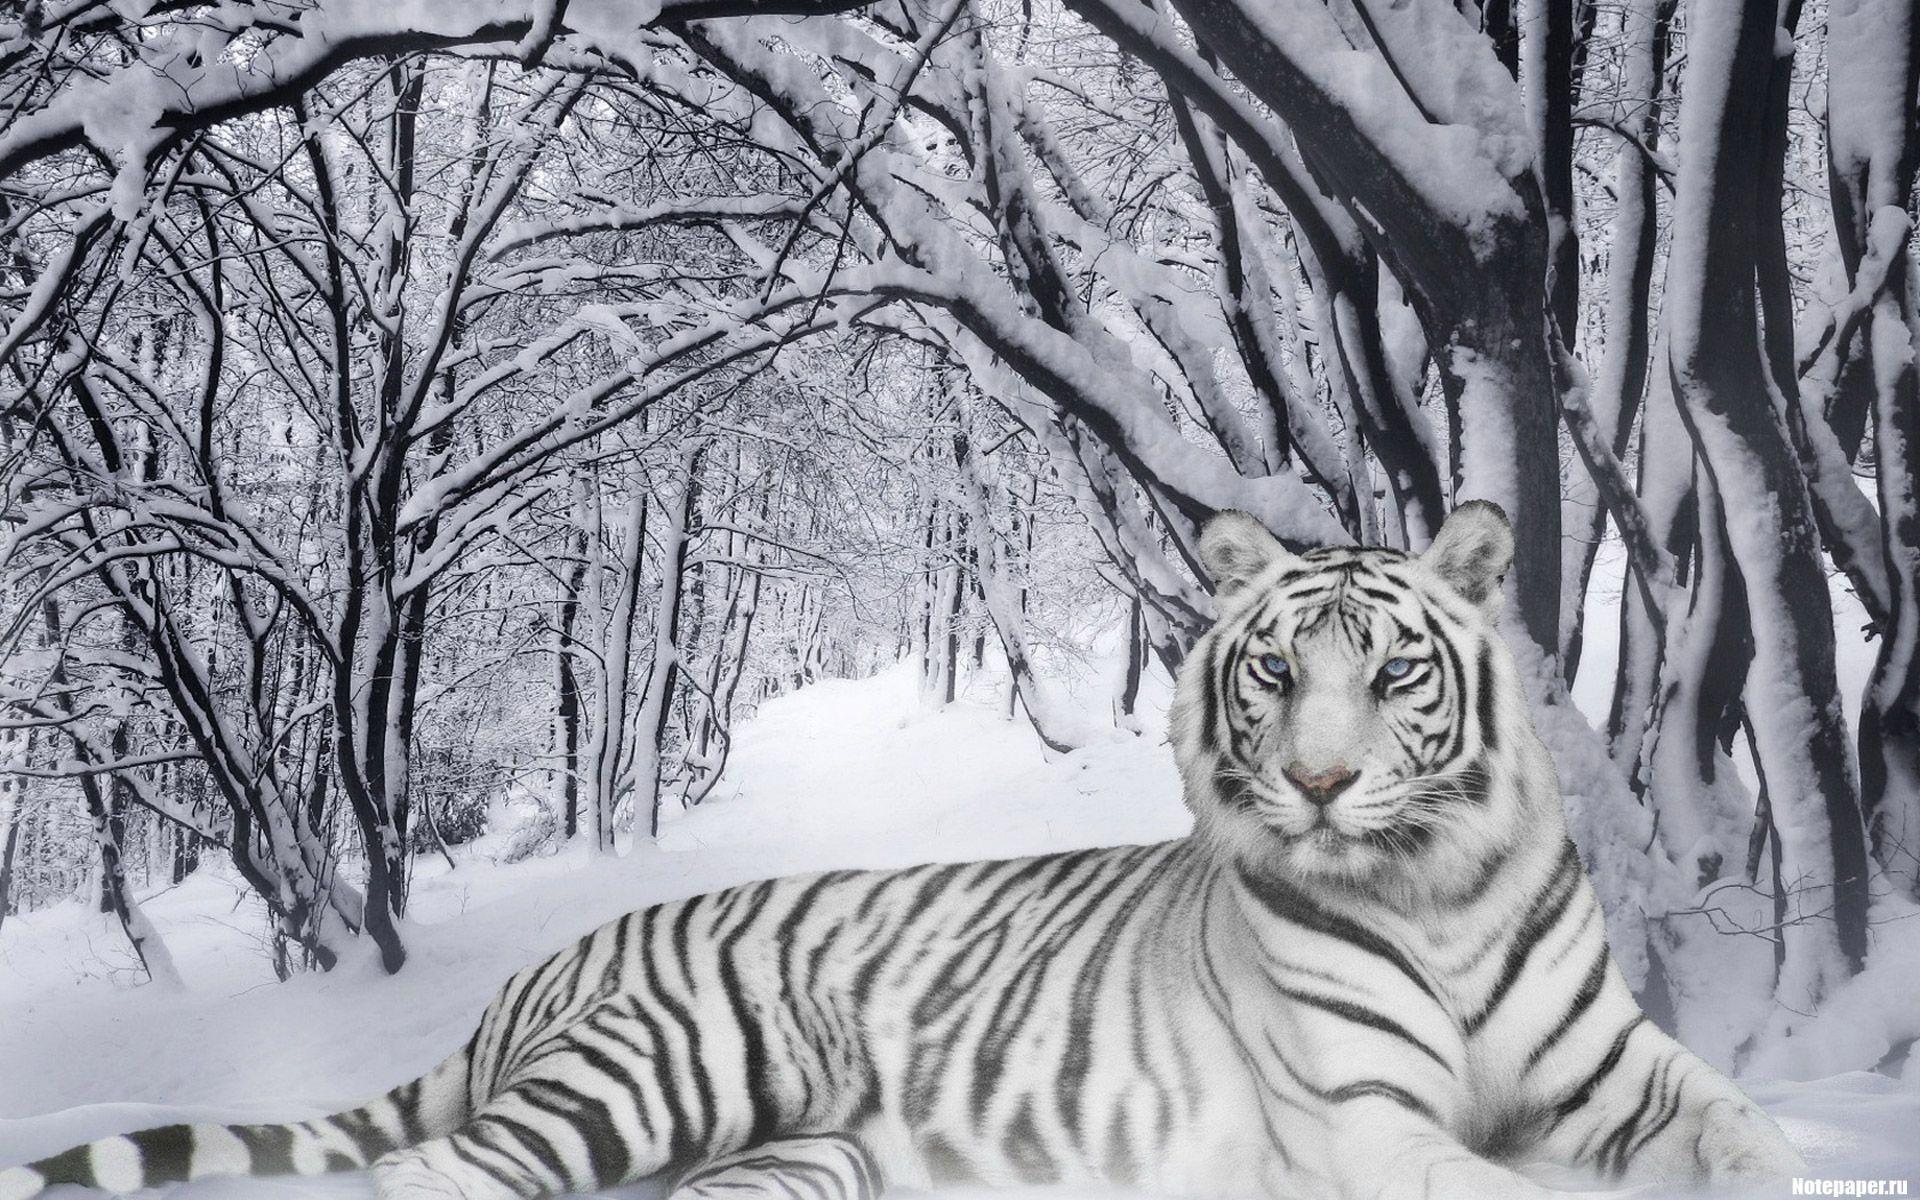 White Leopard in Snow HD Wallpaper. High Definition Wallpaper